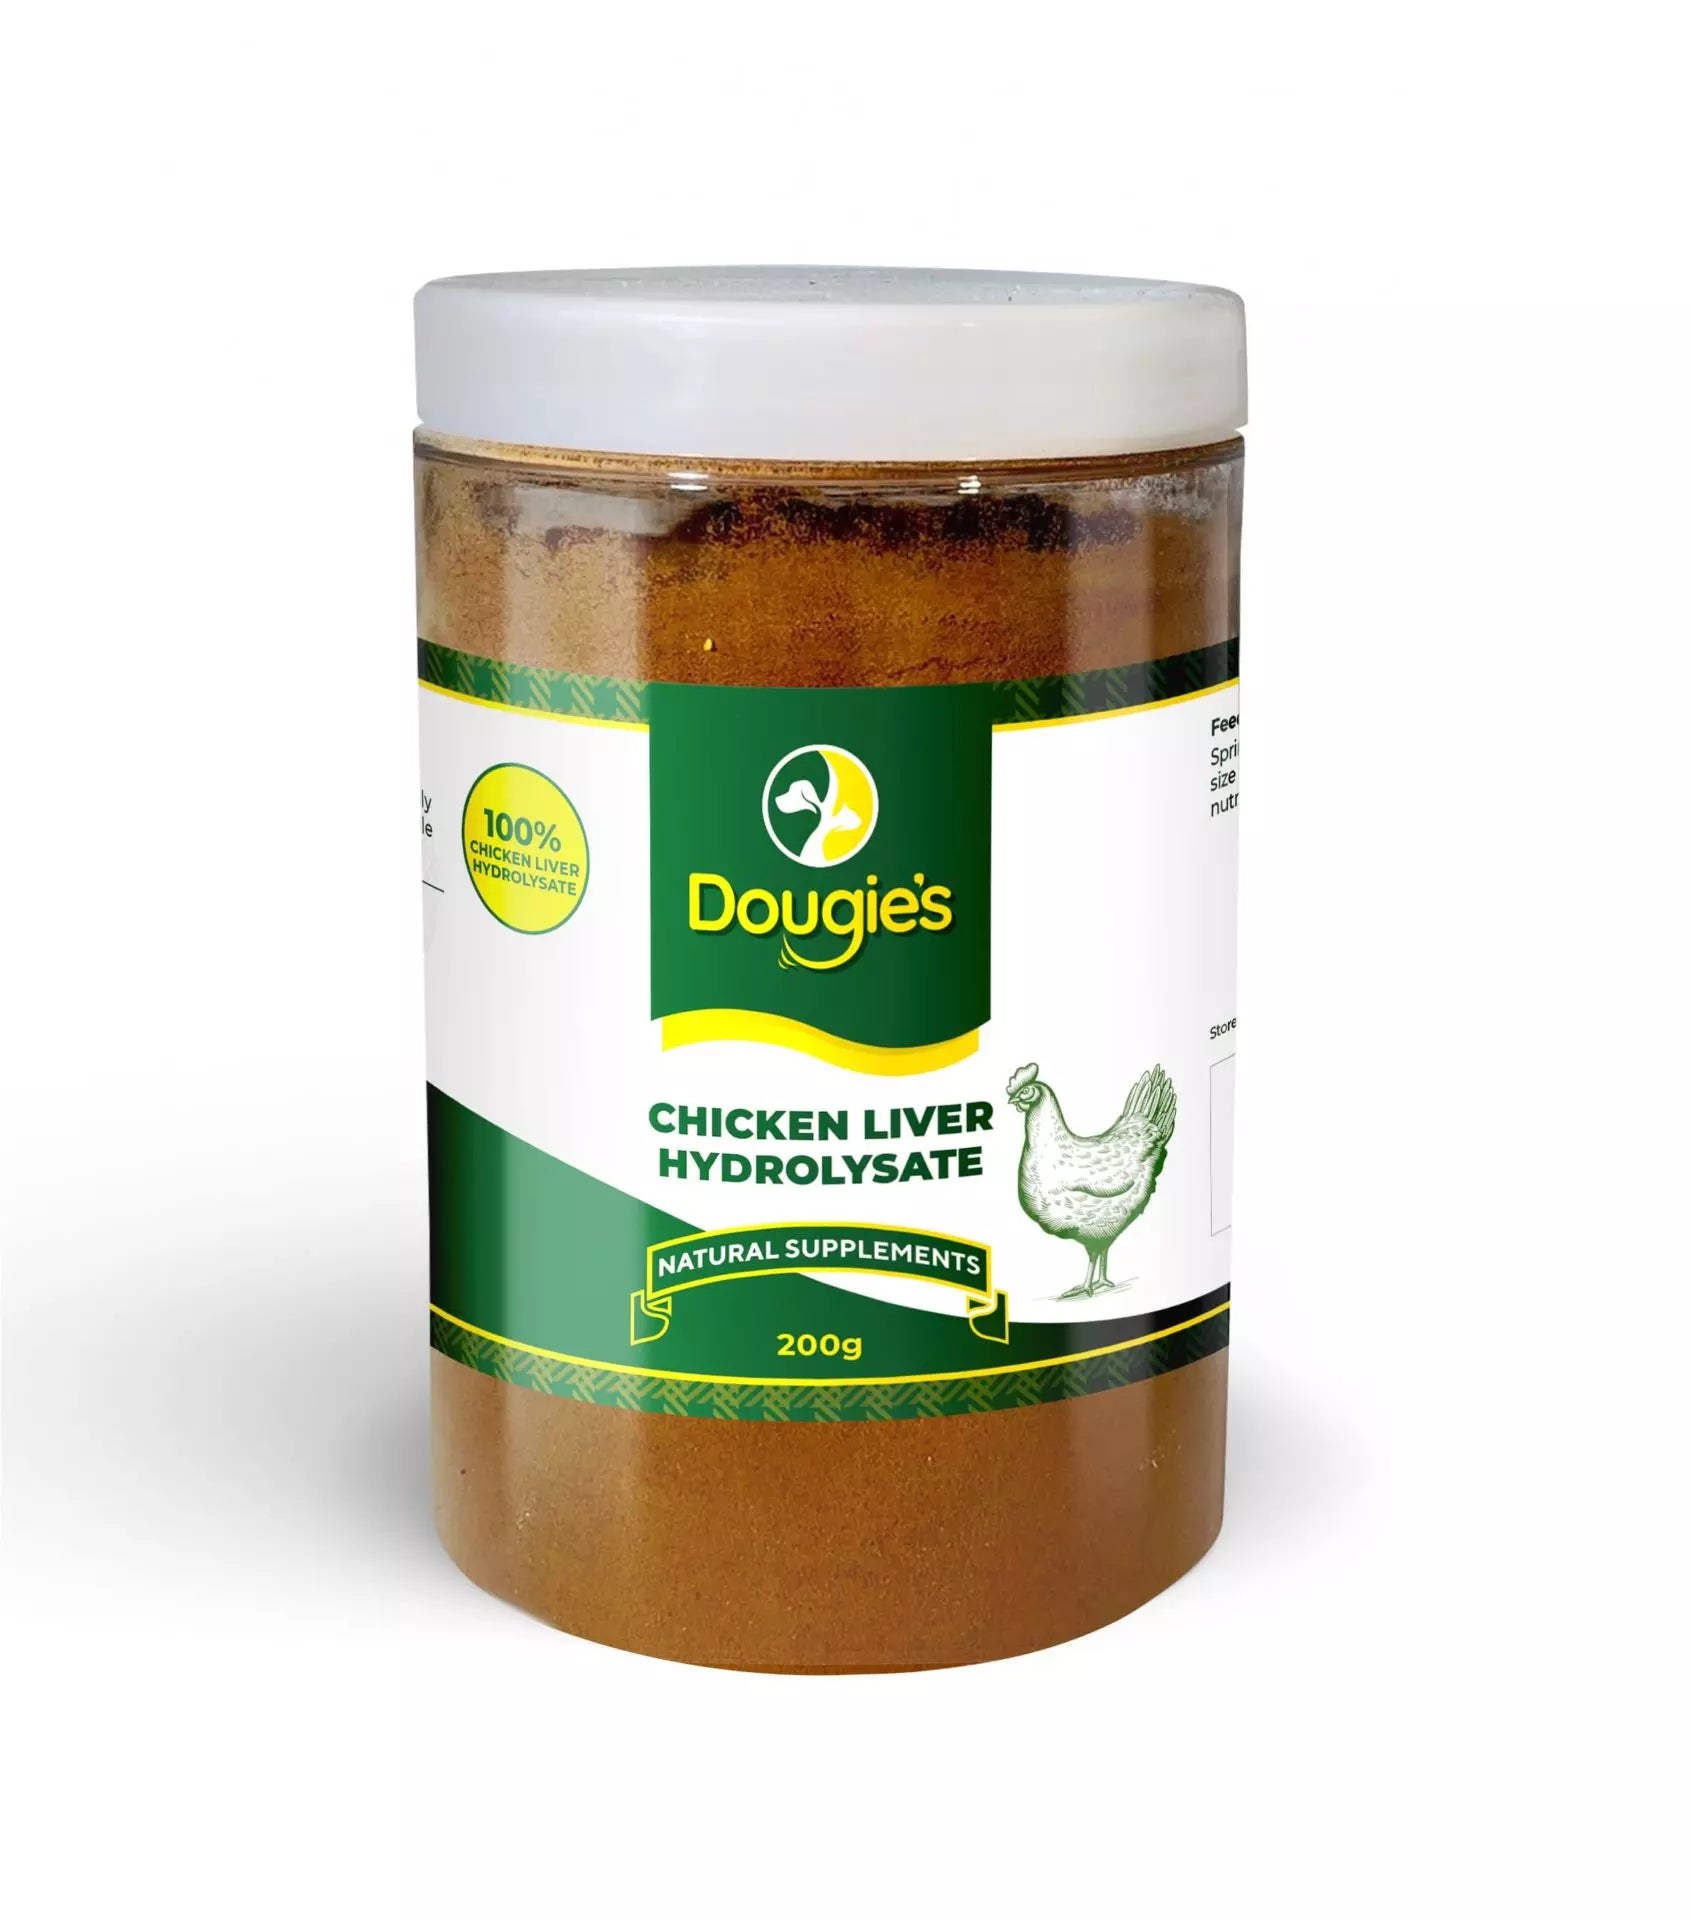 Dougies Chicken Liver Hydrolysate 200g